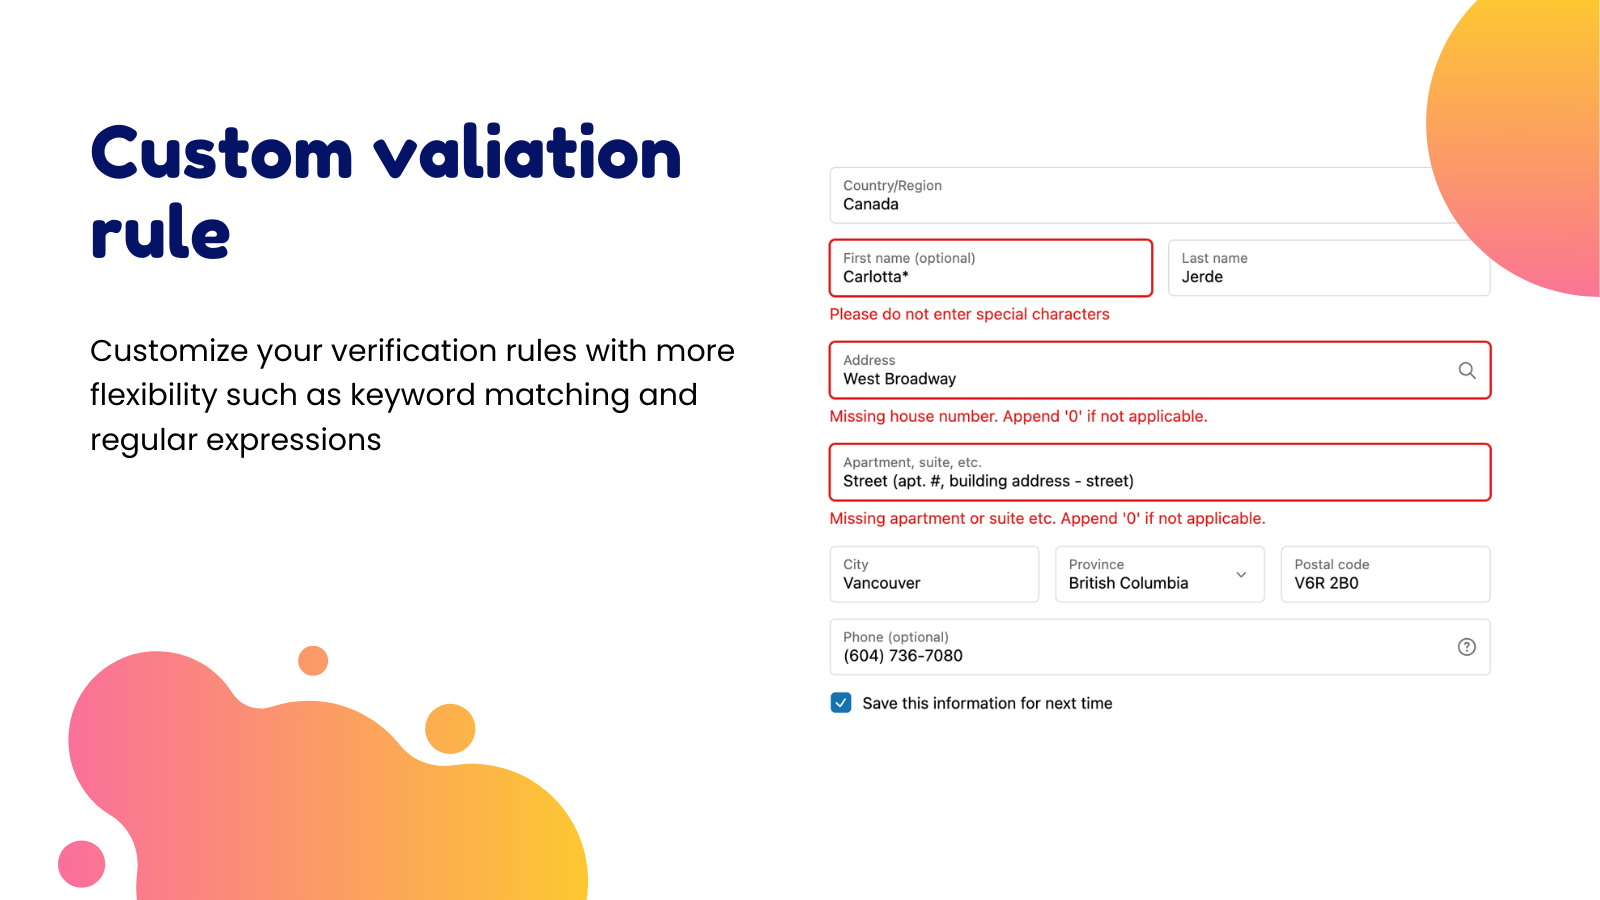 Customize validation rules through keywords and regular express